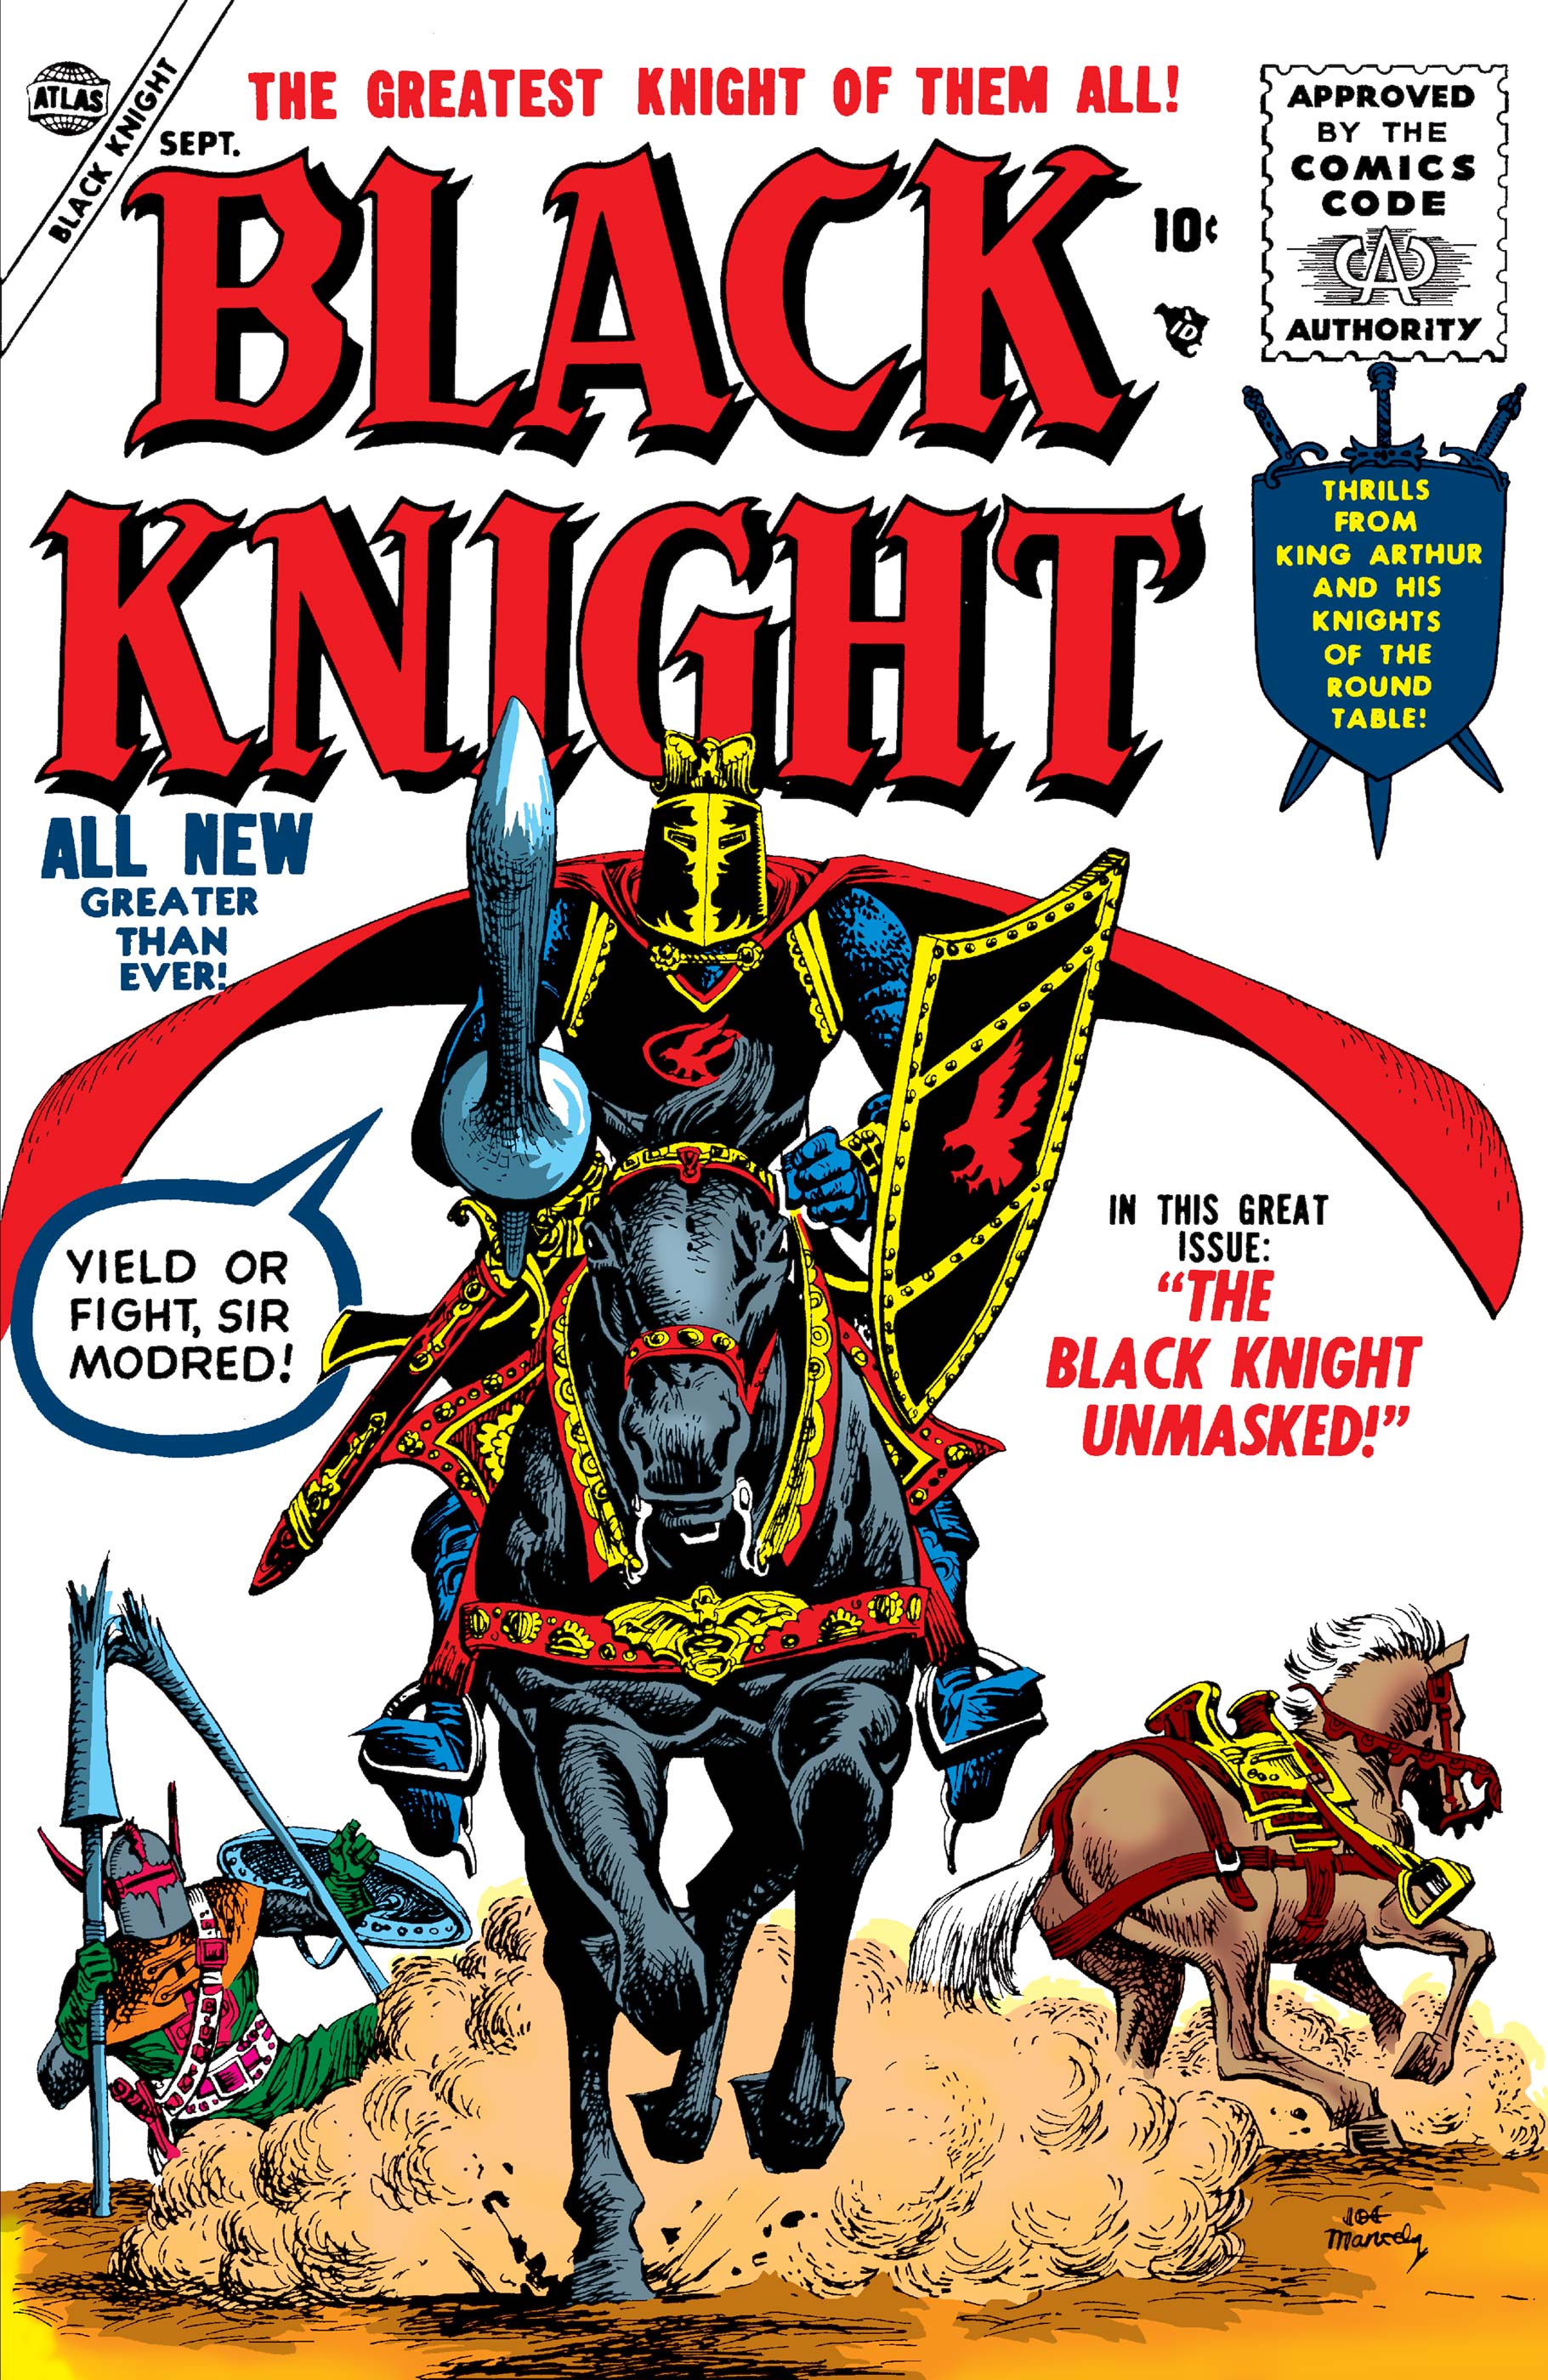 Black Knight (1955) #3